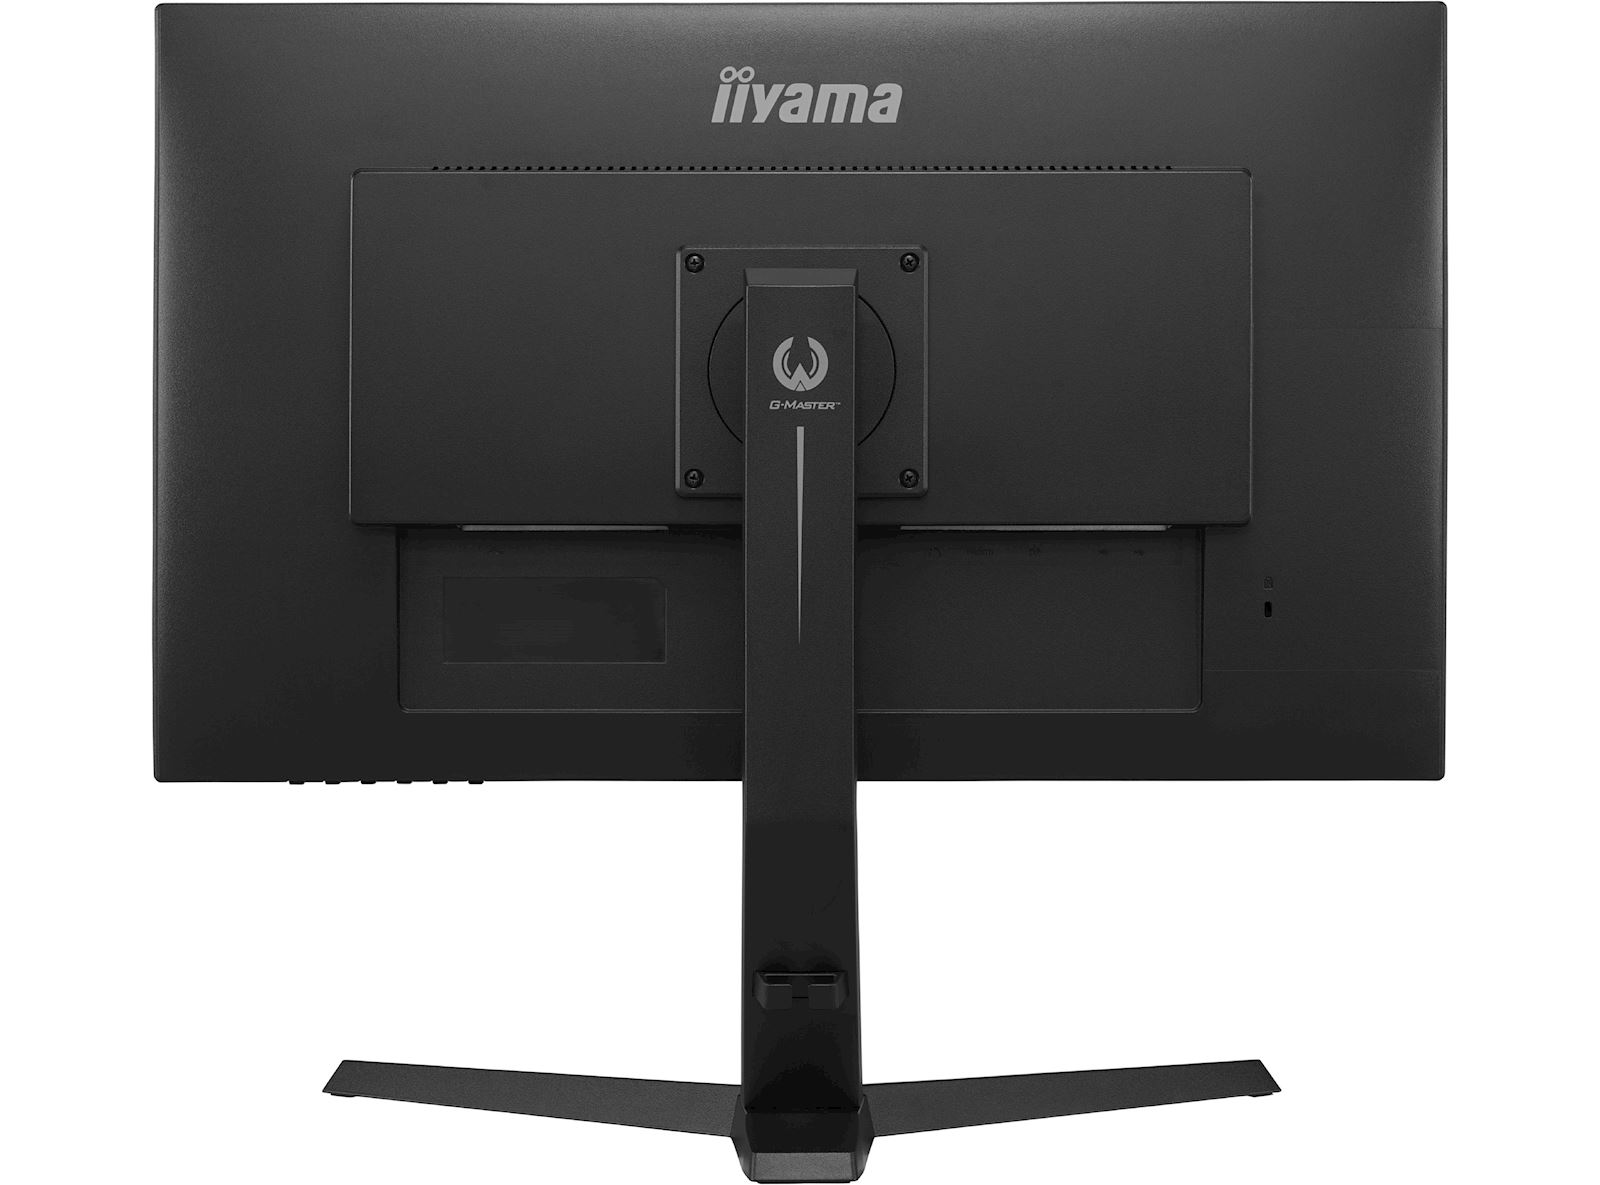 iiyama G-Master Red Eagle GB2570HSU-B1🖥24.5 Full HD IPS FreeSync HDR 165Hz  Gaming Monitor 🔥 Review 